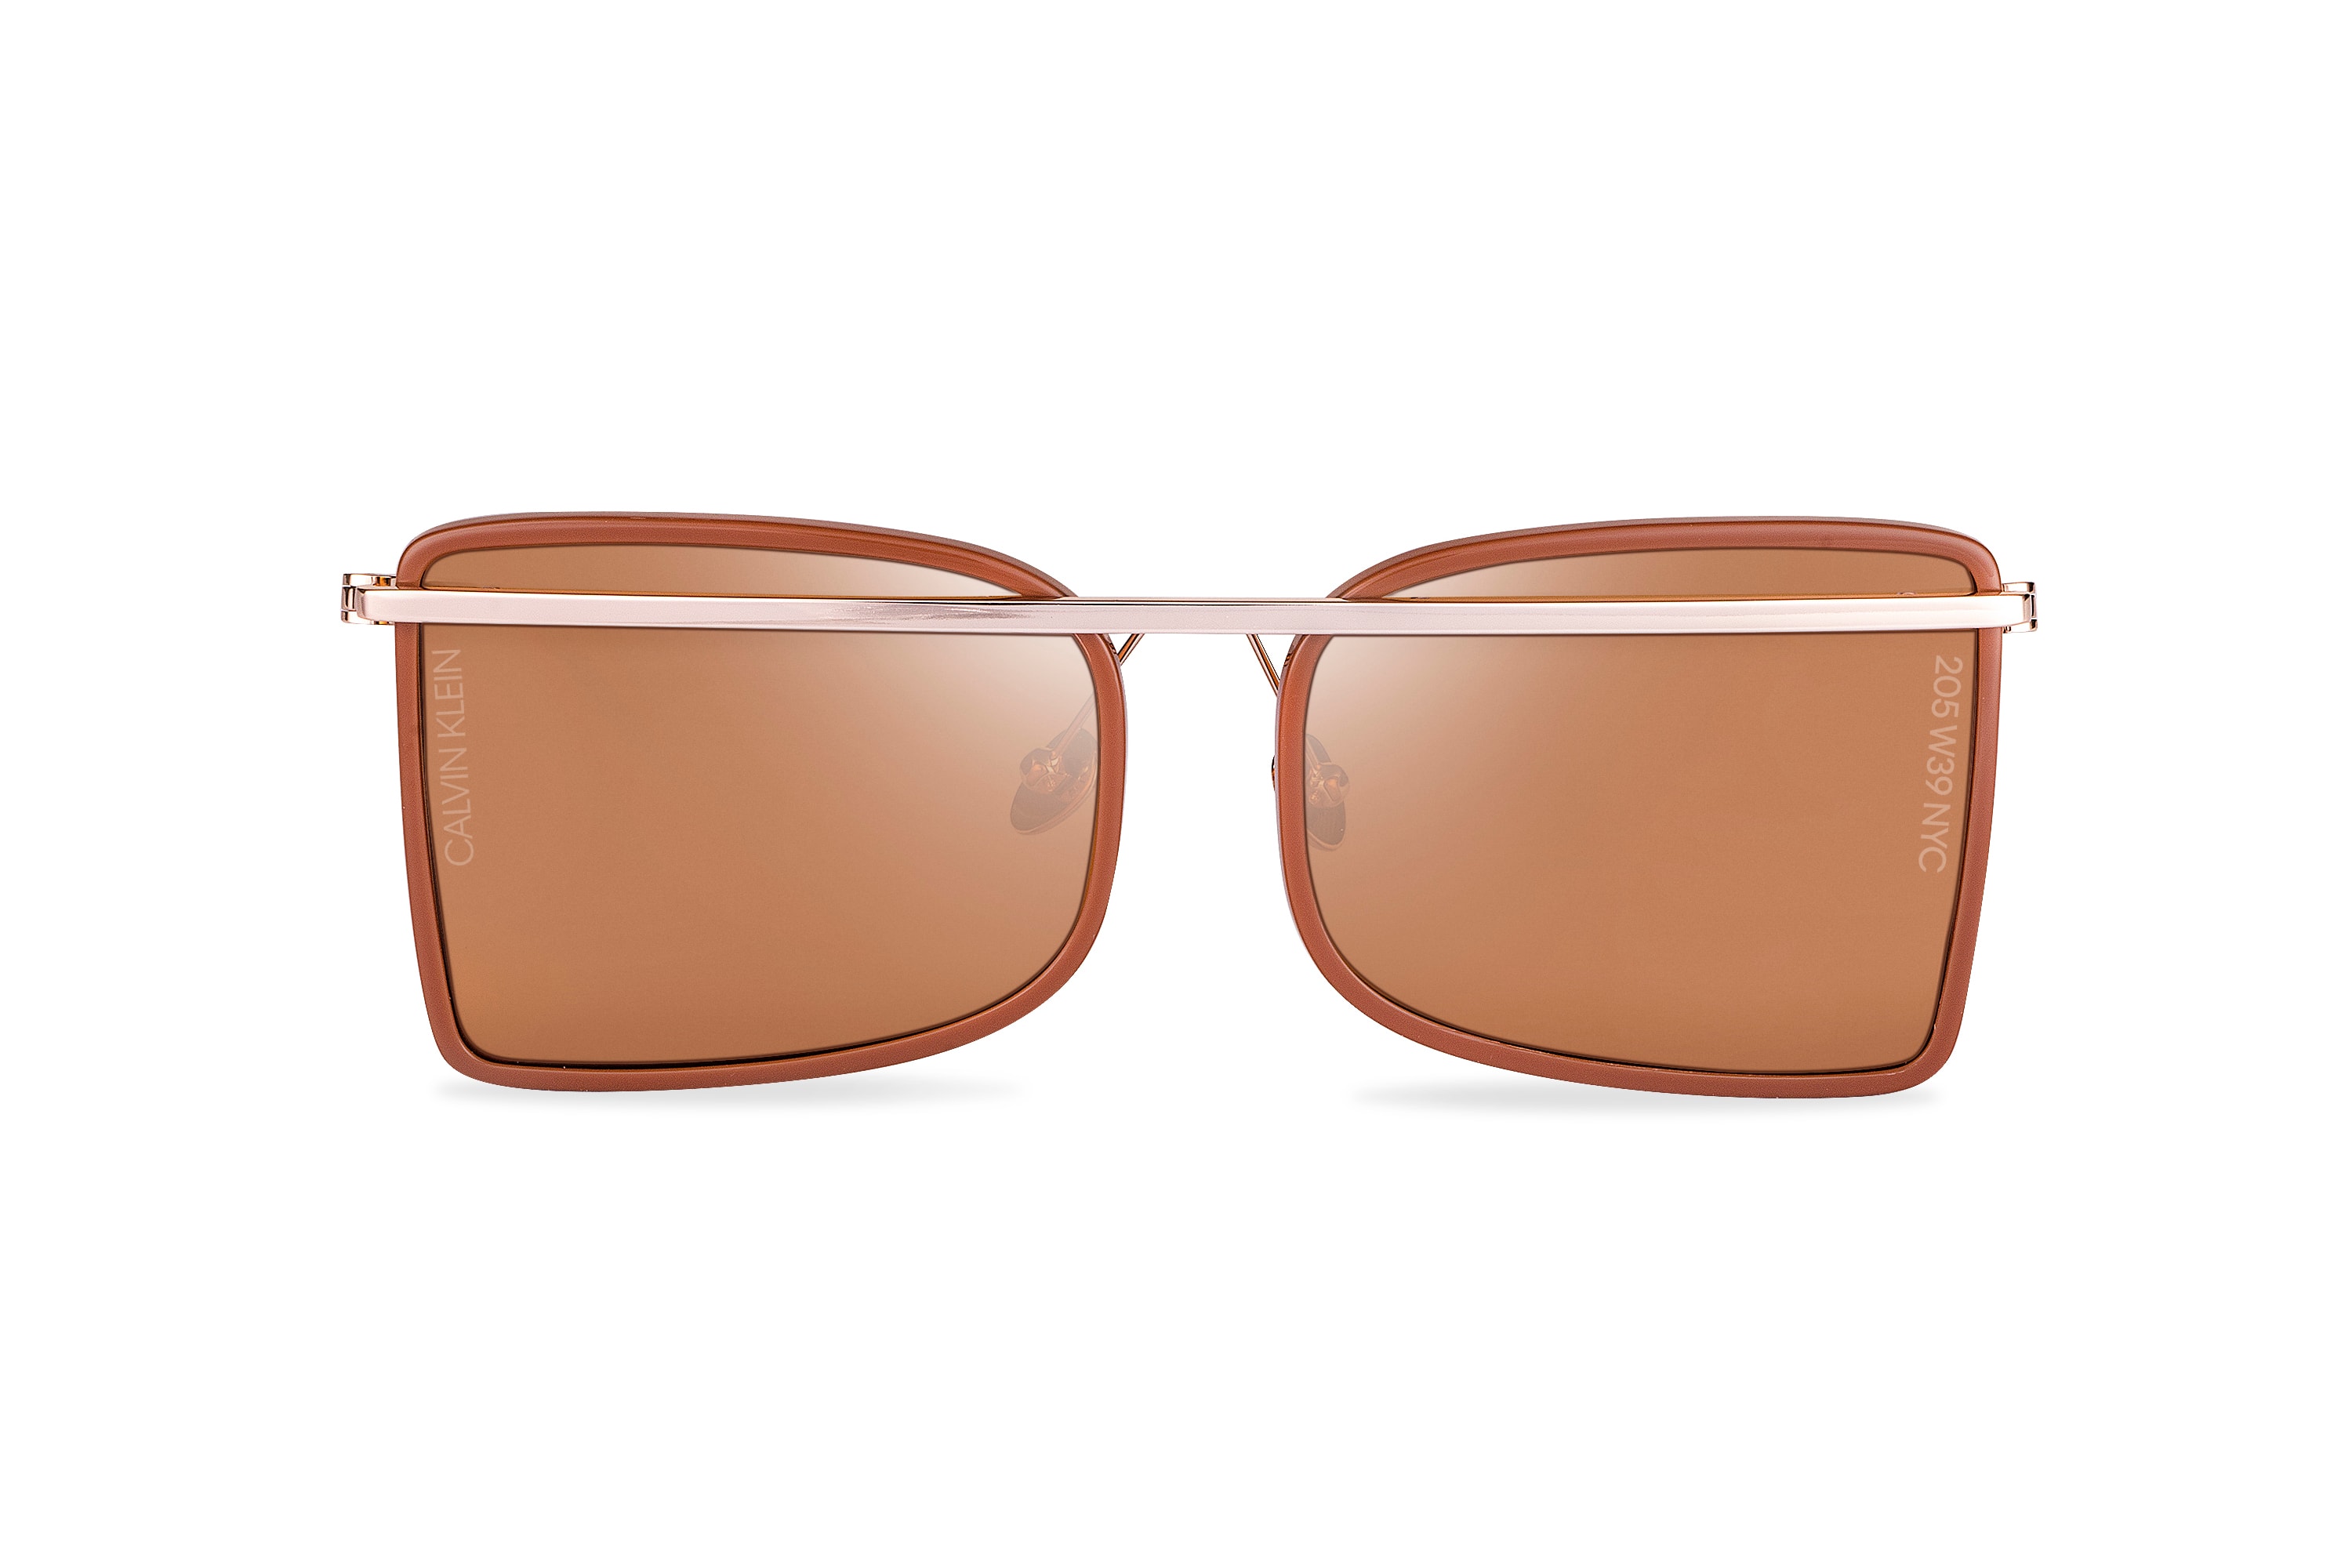 Raf Simons 設計－CALVIN KLEIN 全新「205W39NYC」眼鏡系列登場